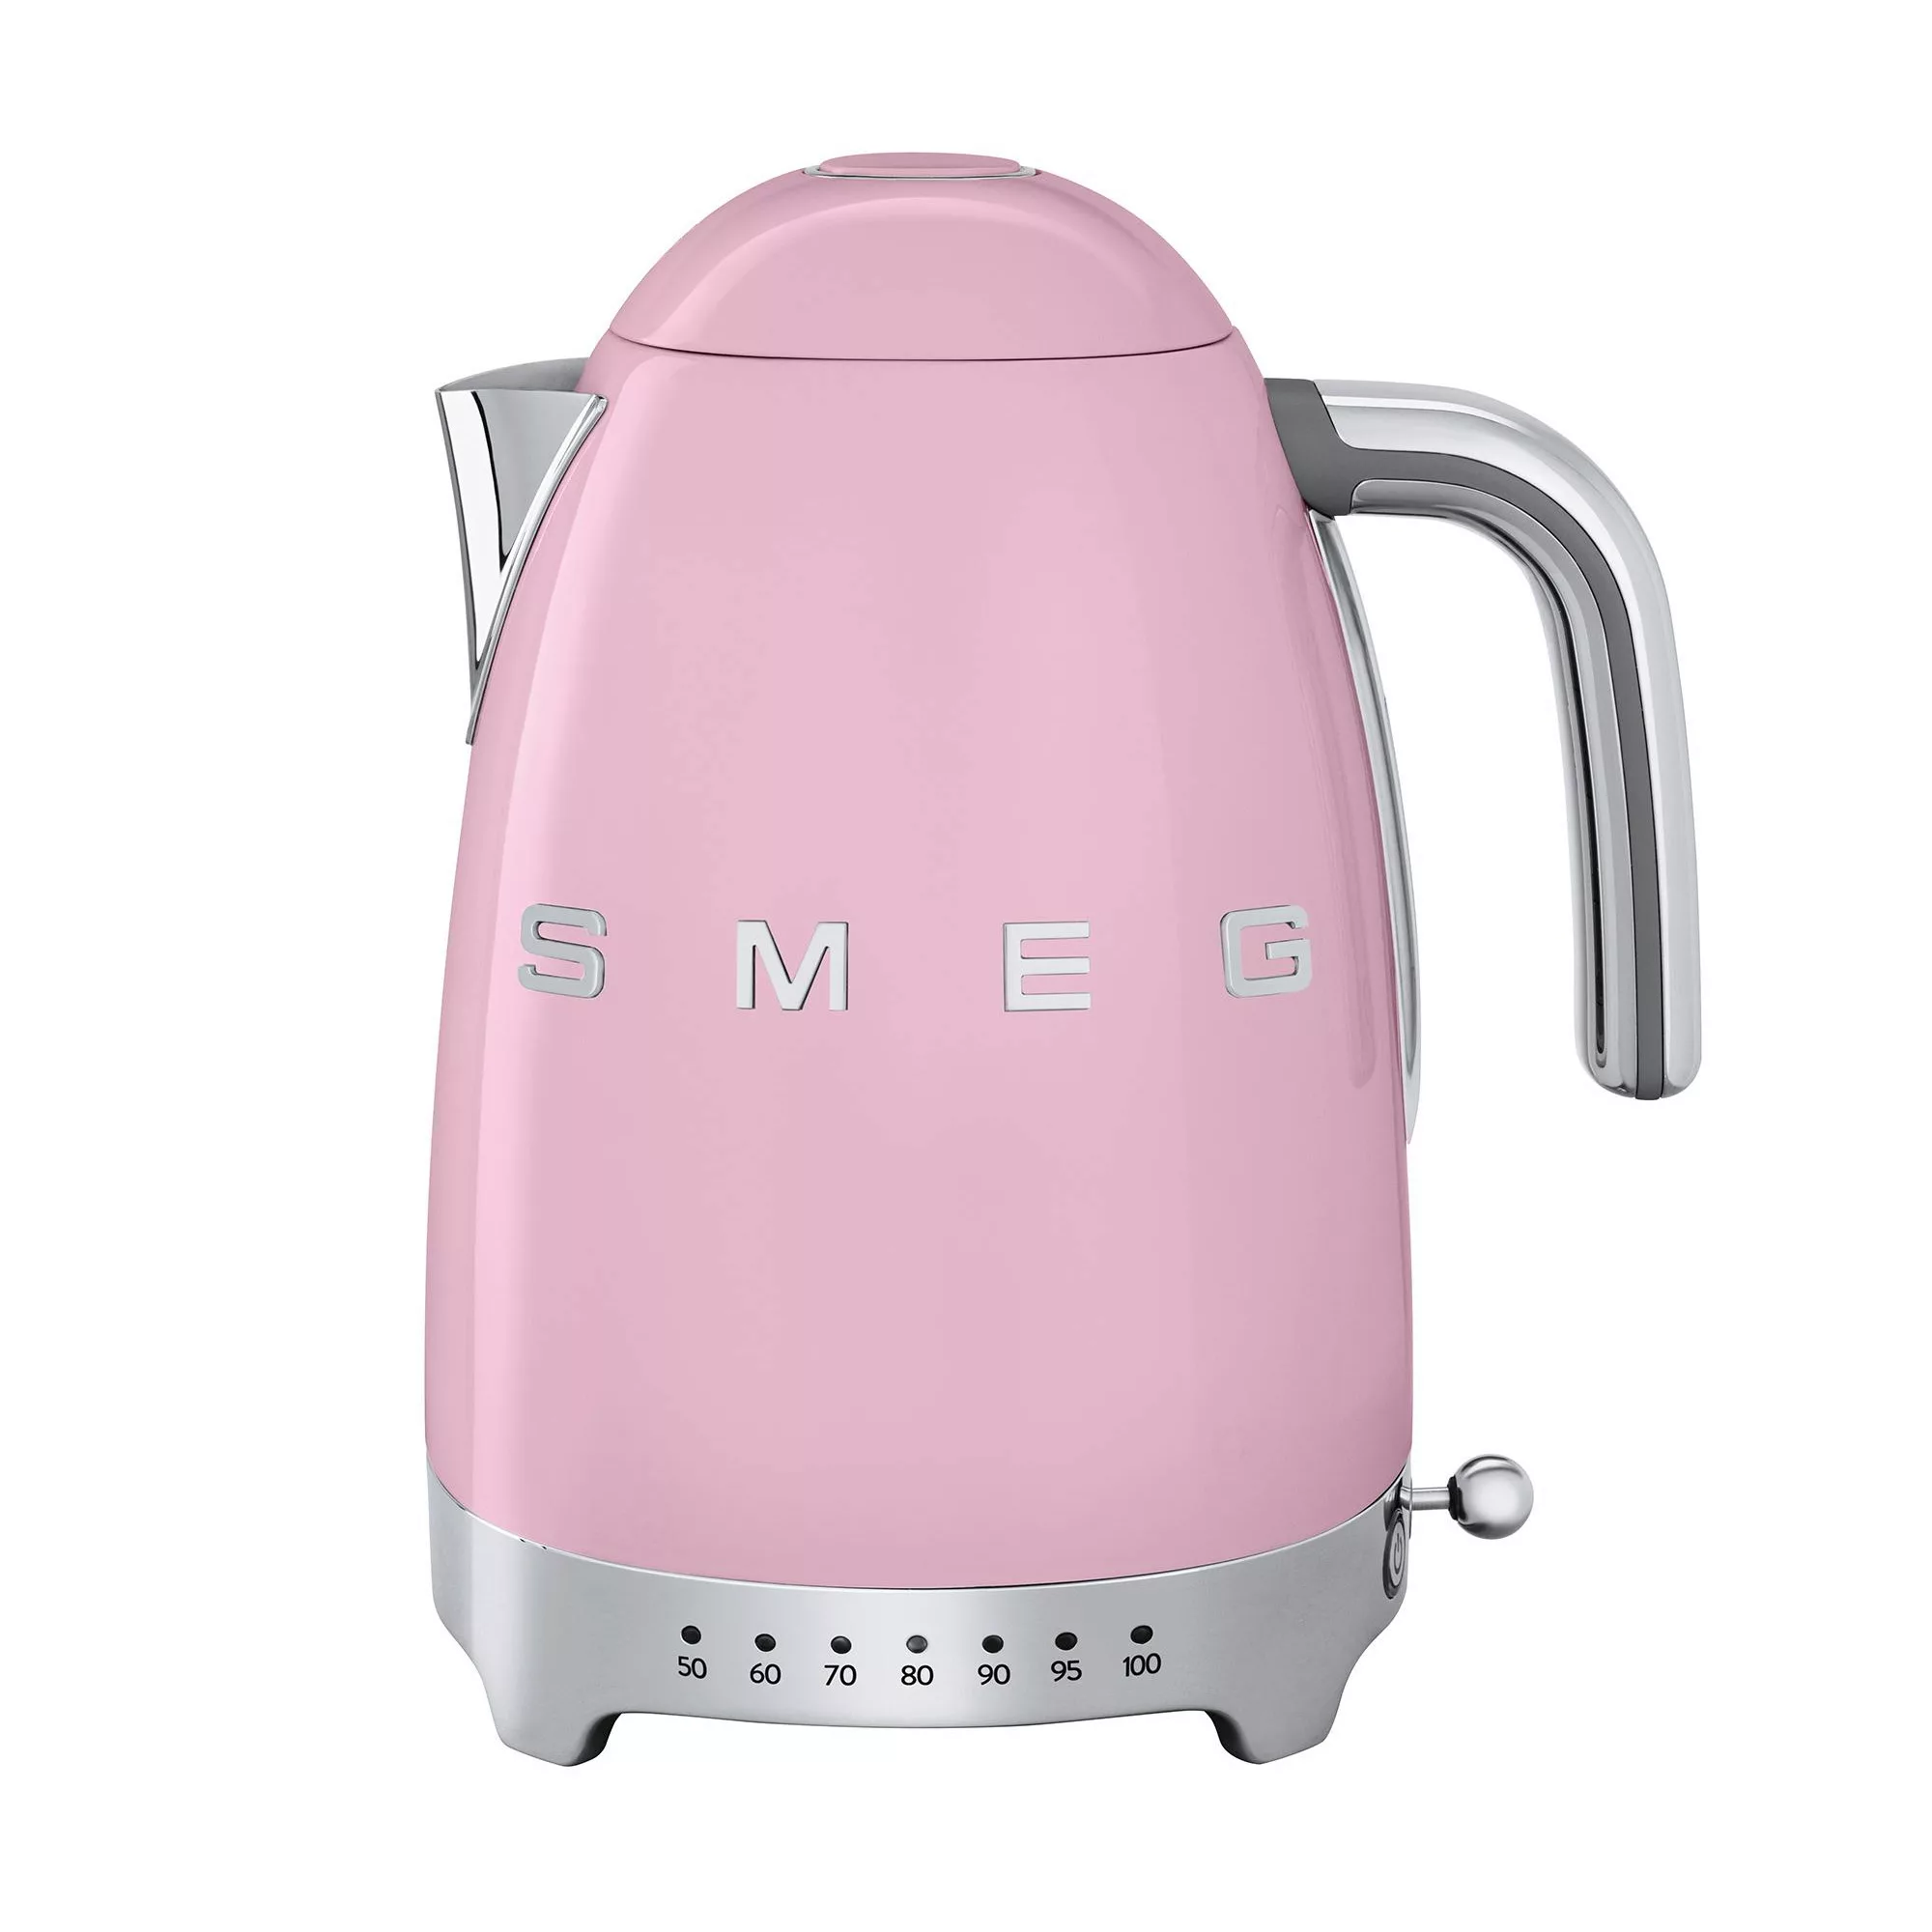 Smeg - SMEG KLF04 Wasserkocher variable Temperatur 1,7L - cadillac pink/lac günstig online kaufen